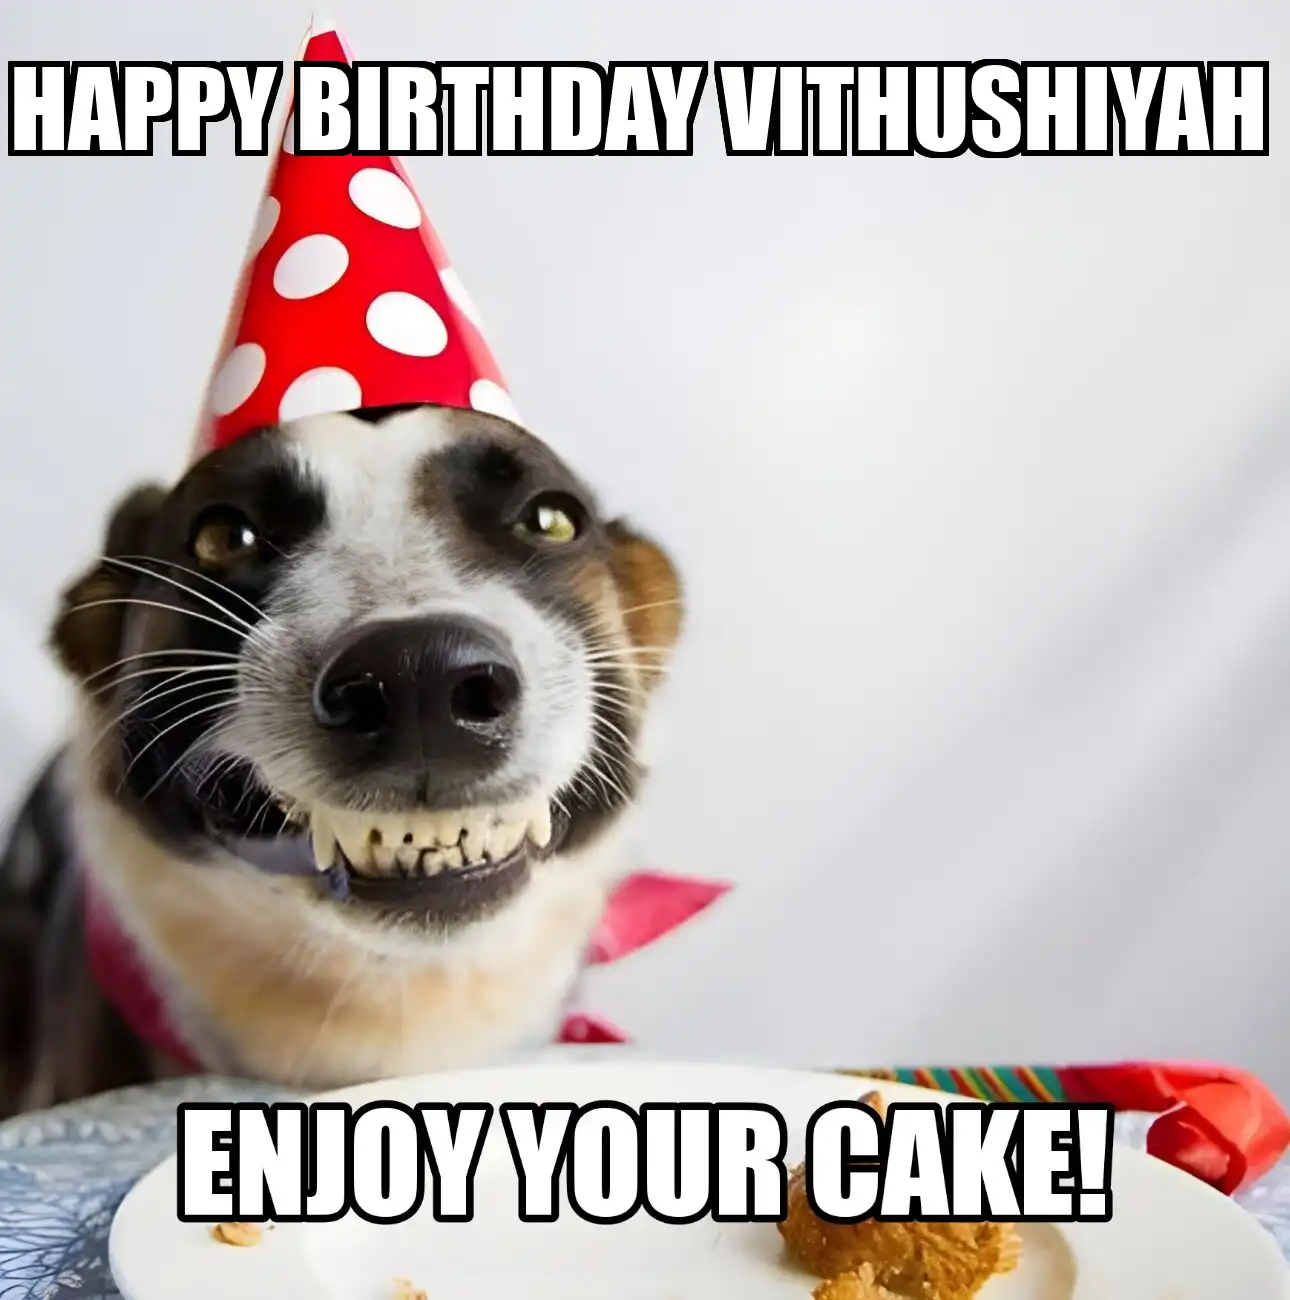 Happy Birthday Vithushiyah Enjoy Your Cake Dog Meme